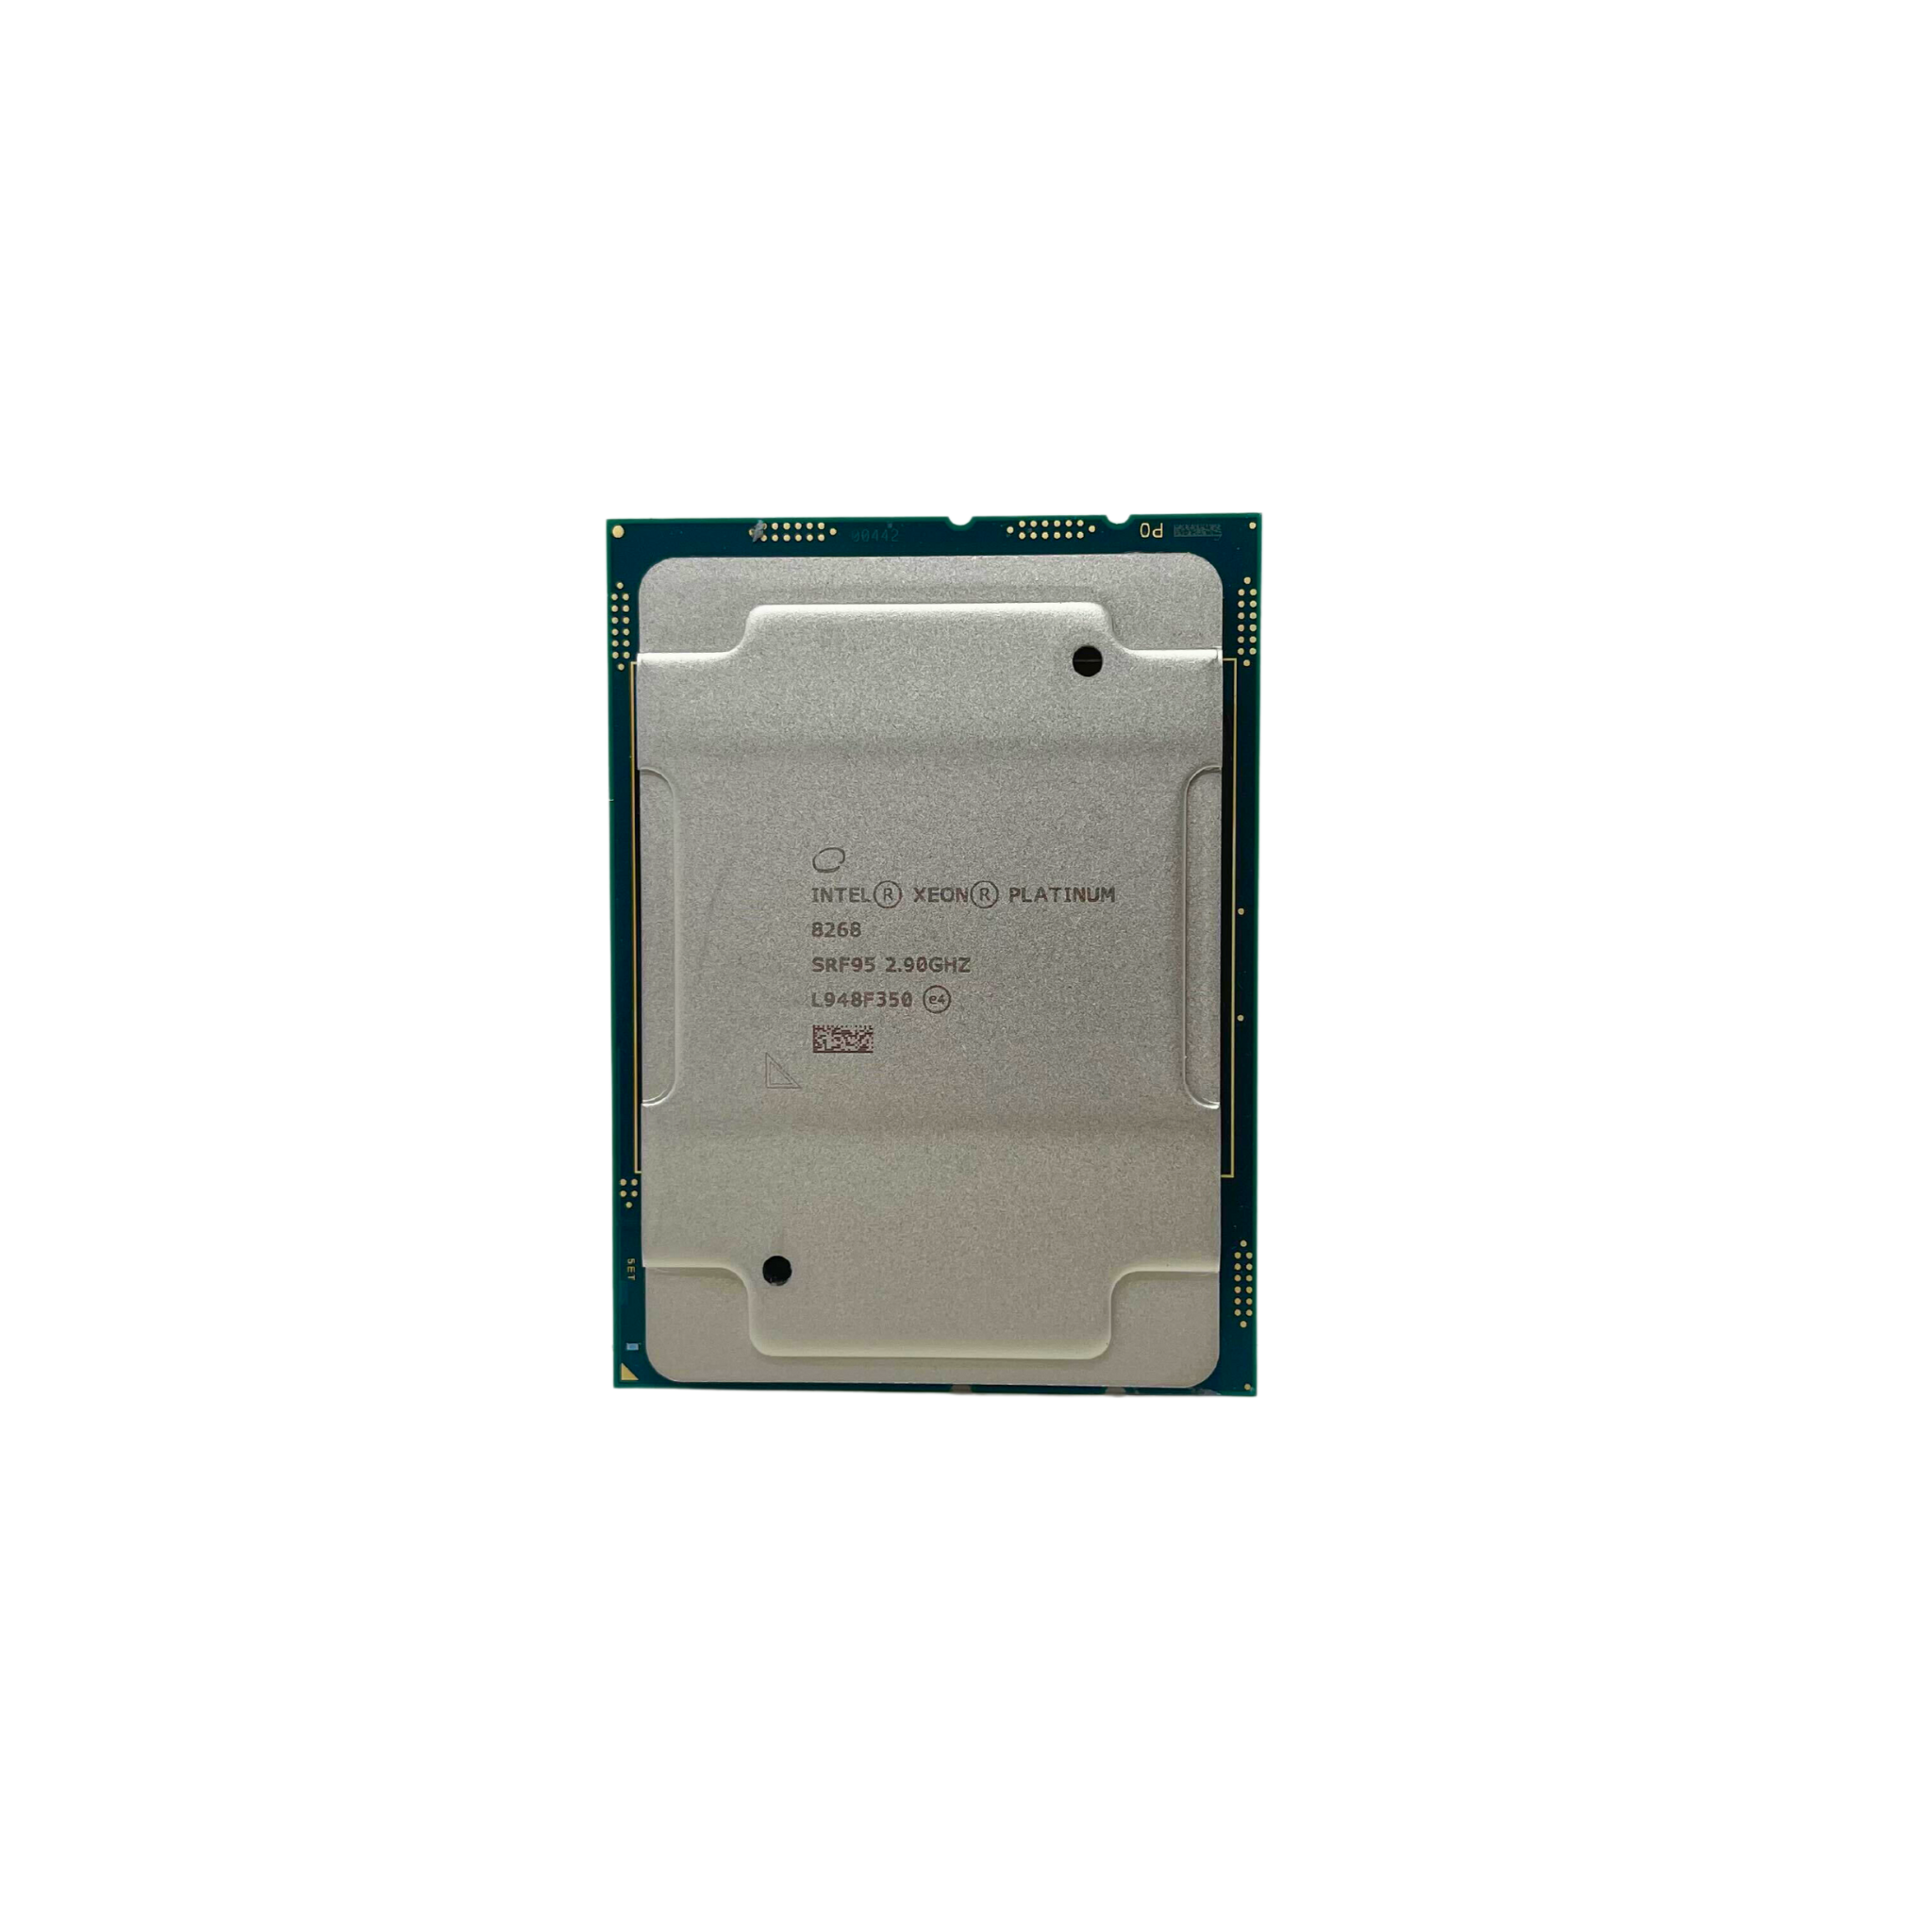 Intel Xeon Platinum 8268 24-Core 2.90GHz 35.75MB 205W LGA3647 CPU Processor (8268)